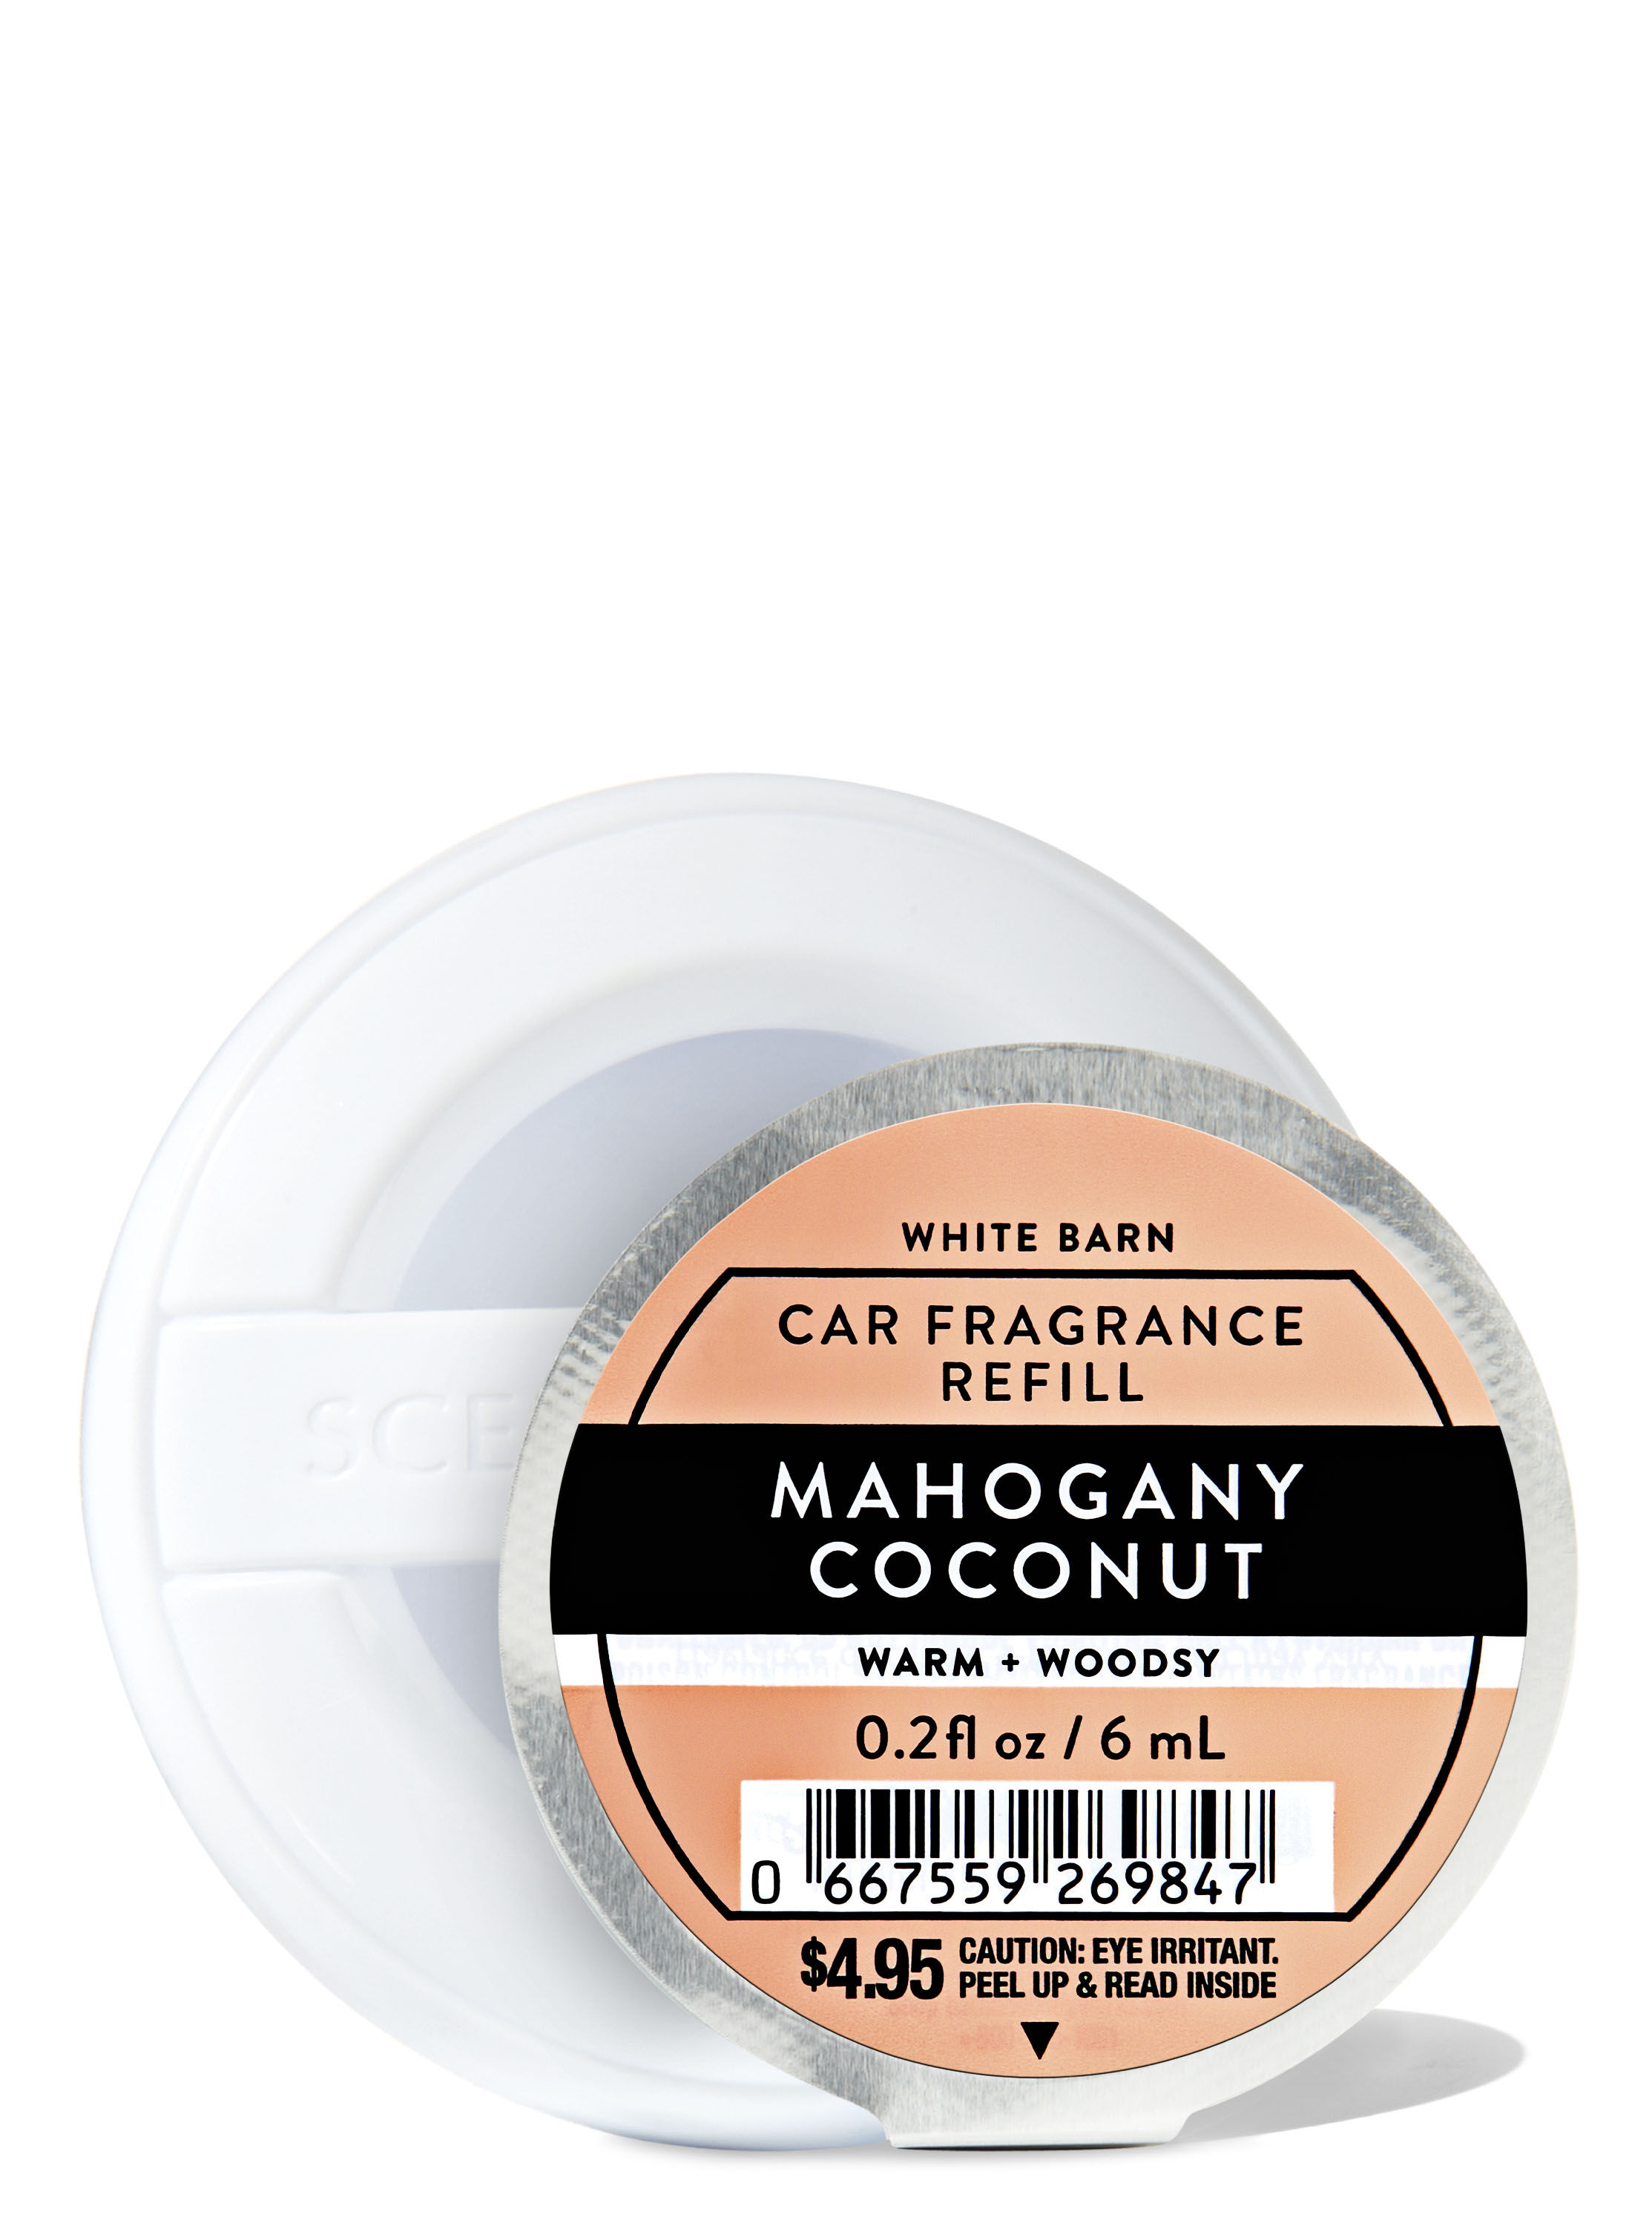 Mahogany Coconut Car Fragrance Refill